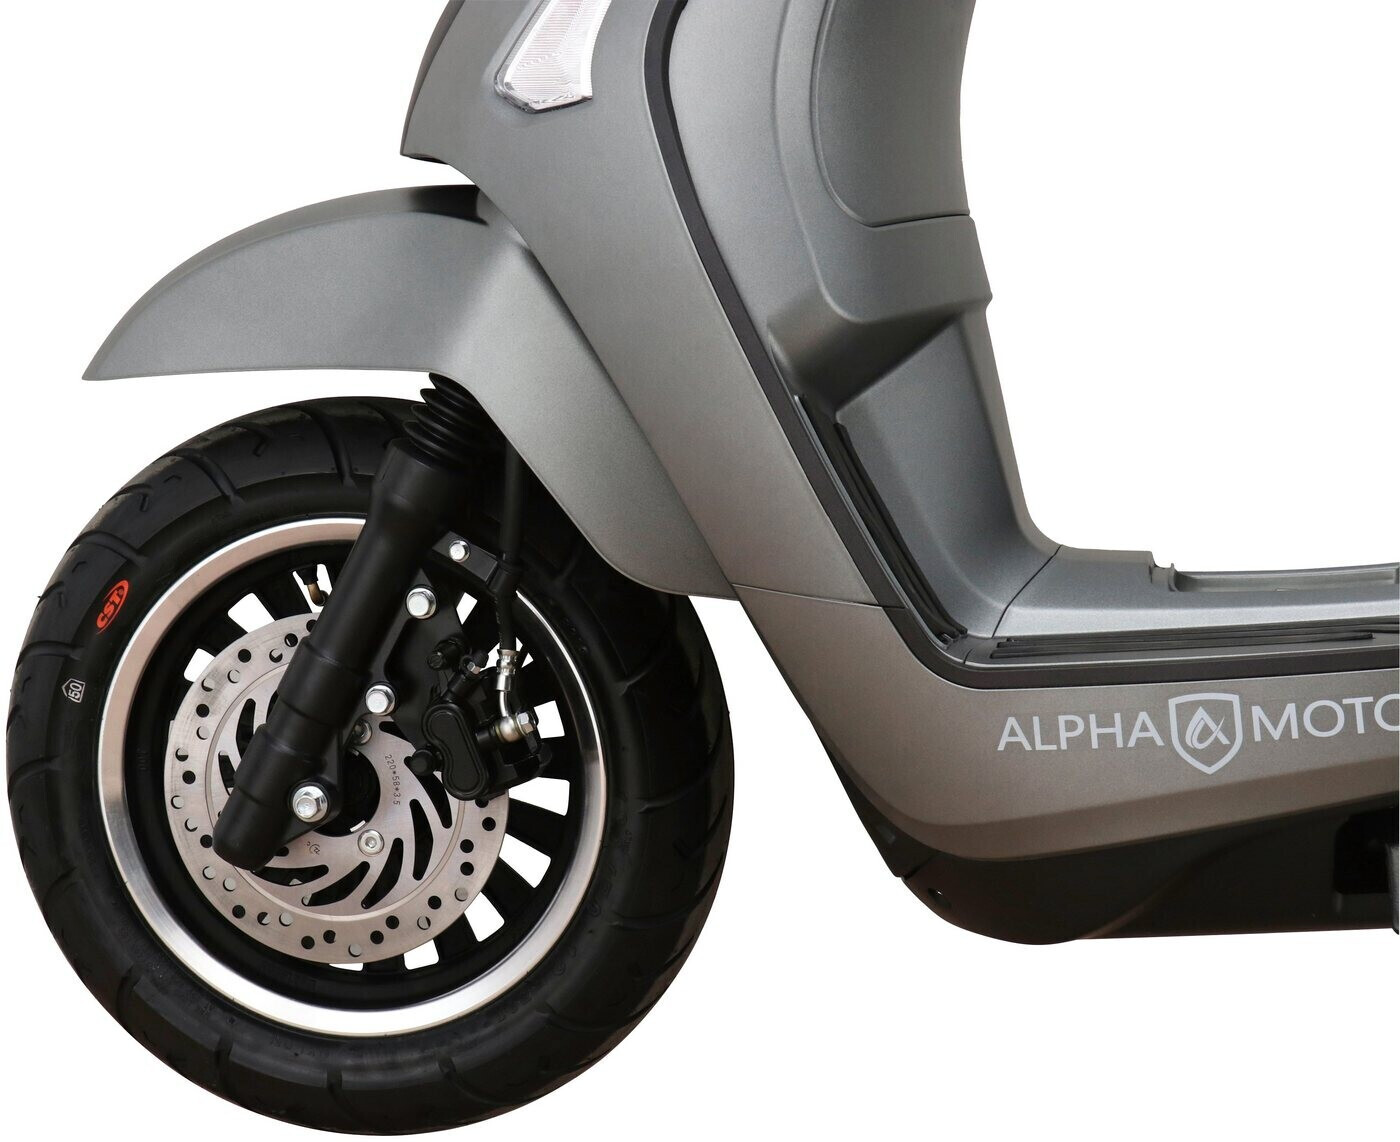 Alpha Motors Vita 125 ab grau 2.041,05 € bei Preisvergleich | ccm